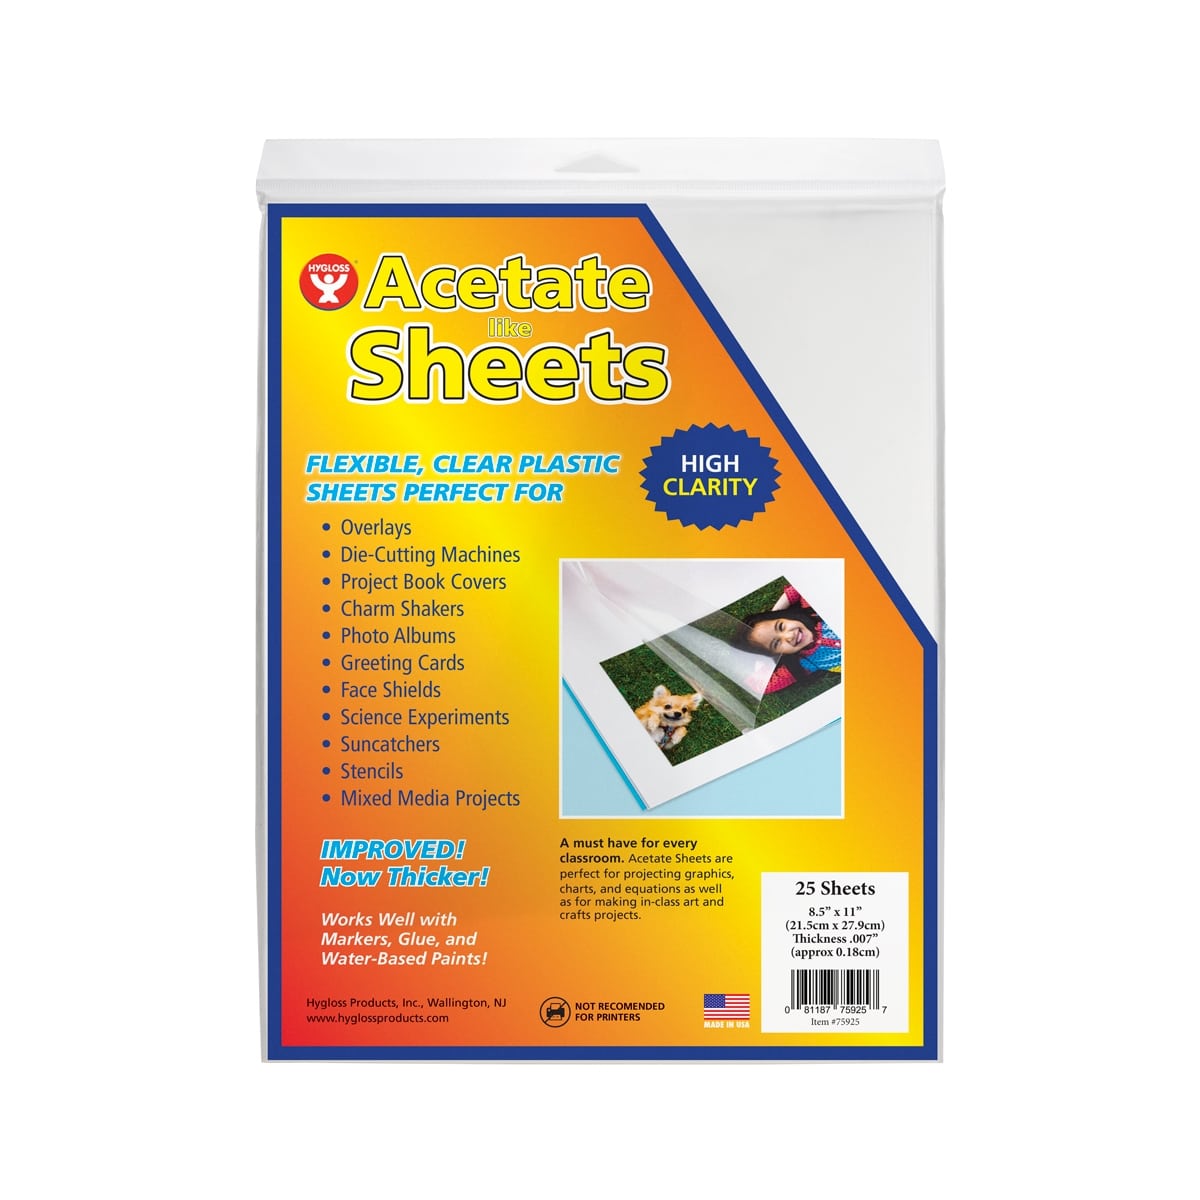 Spellbinders® Clear Acetate Sheets, 8.5 x 11